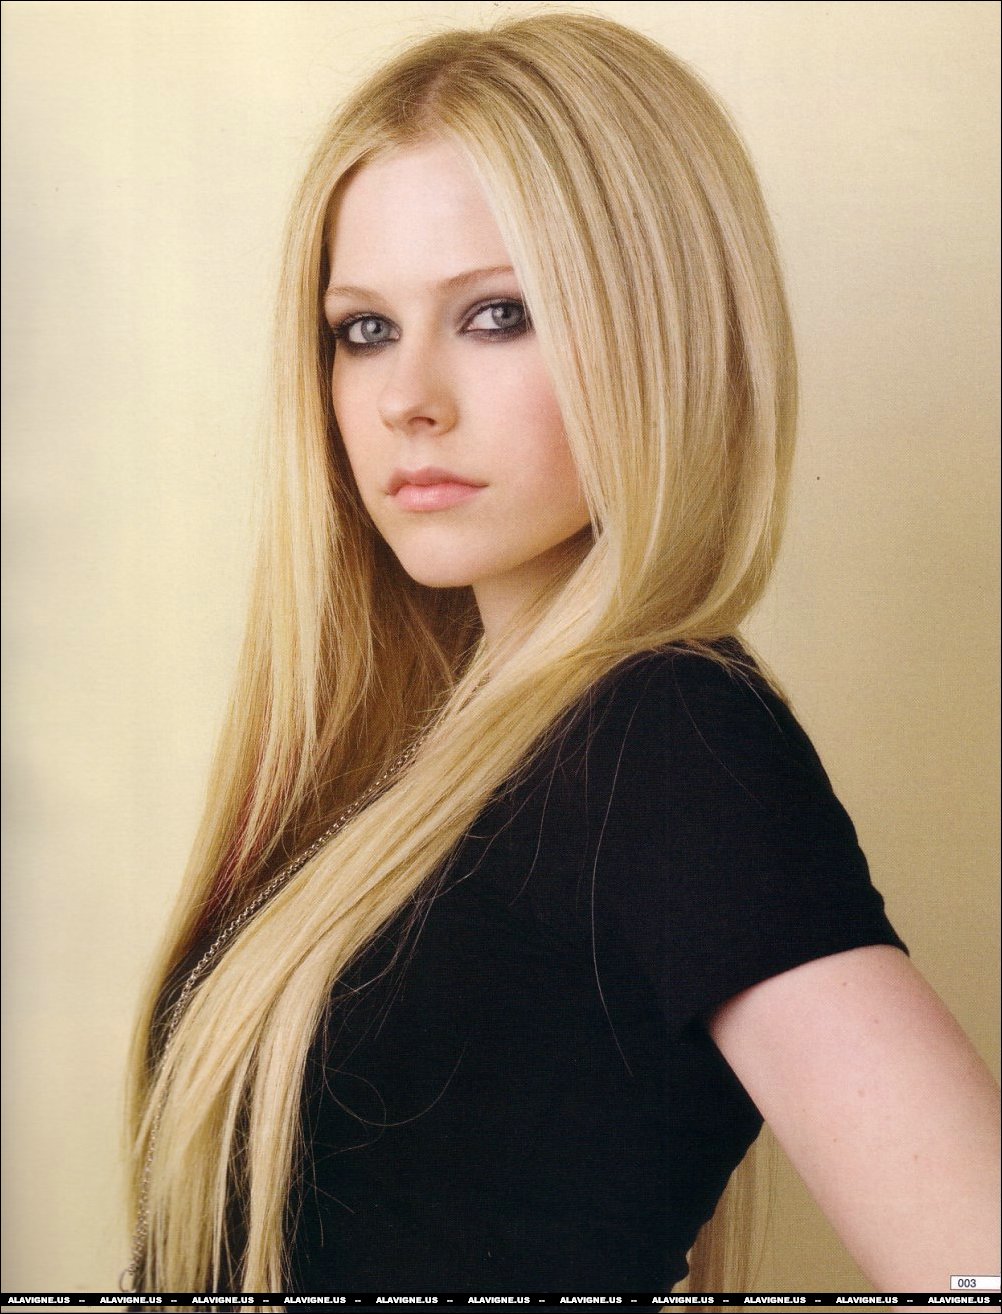 Avril Lavigne: Avril Lavigne pics